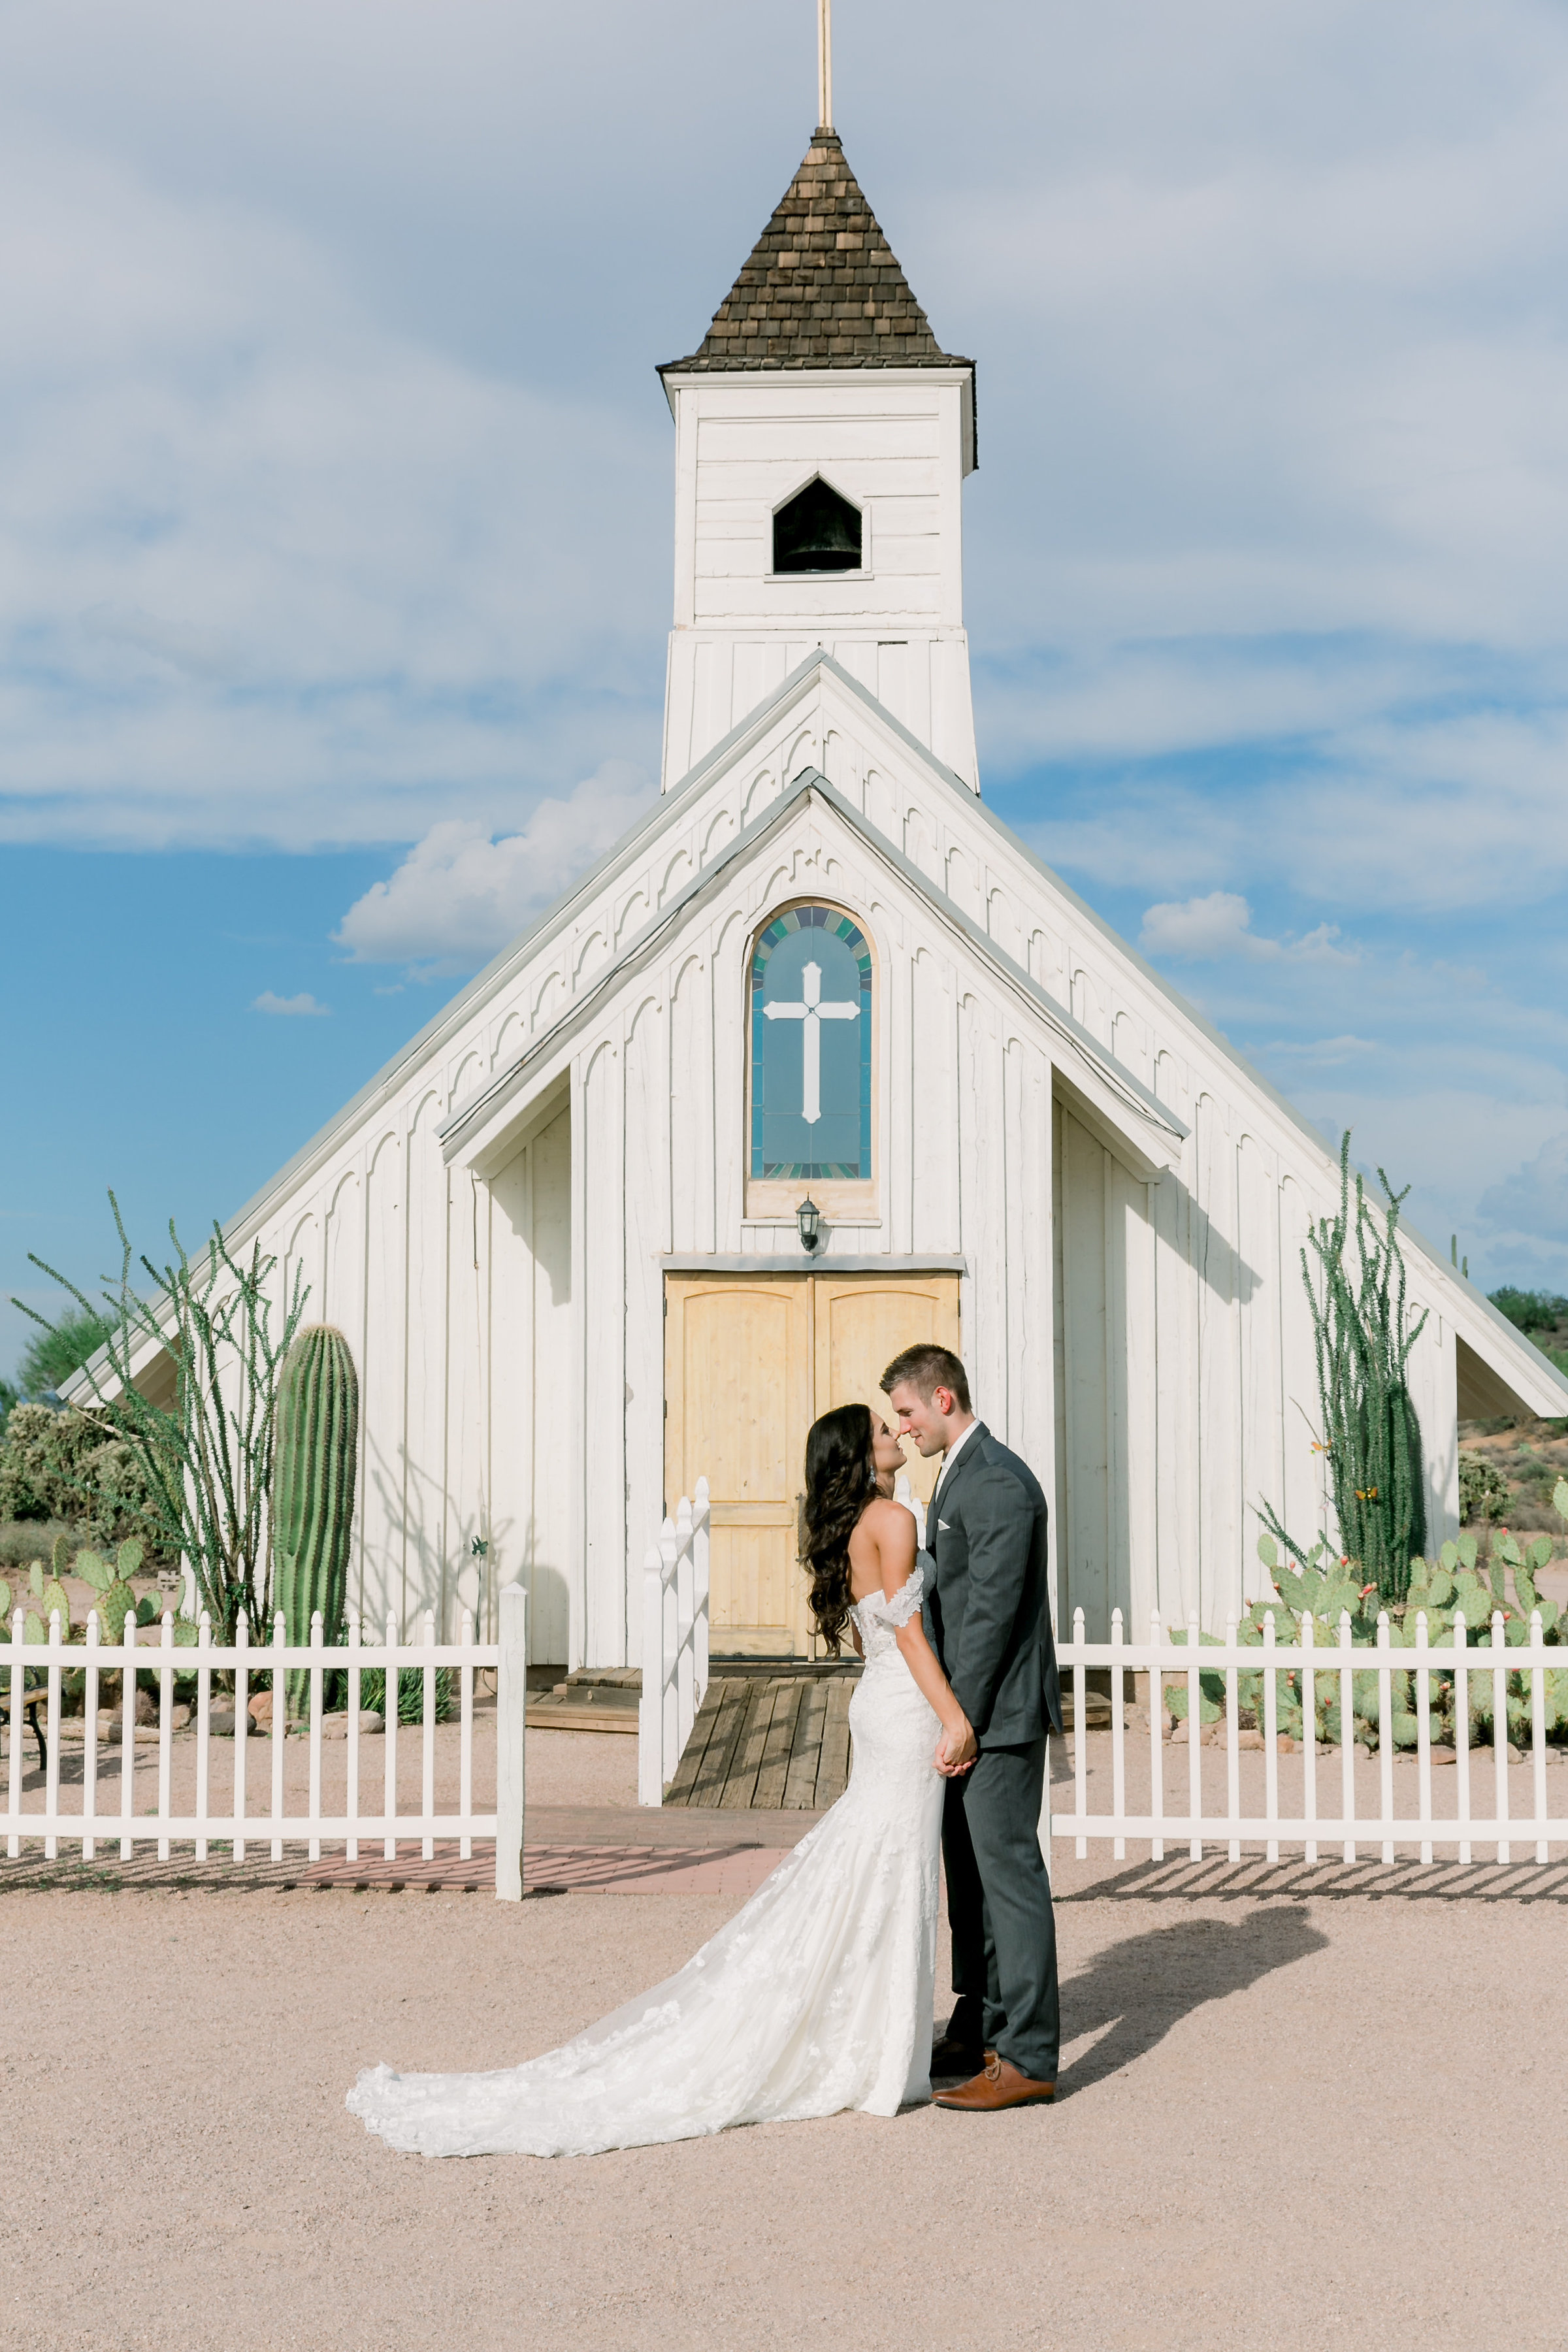 Karlie Colleen Photography - Arizona Wedding - The Paseo Venue - Jackie & Ryan -139